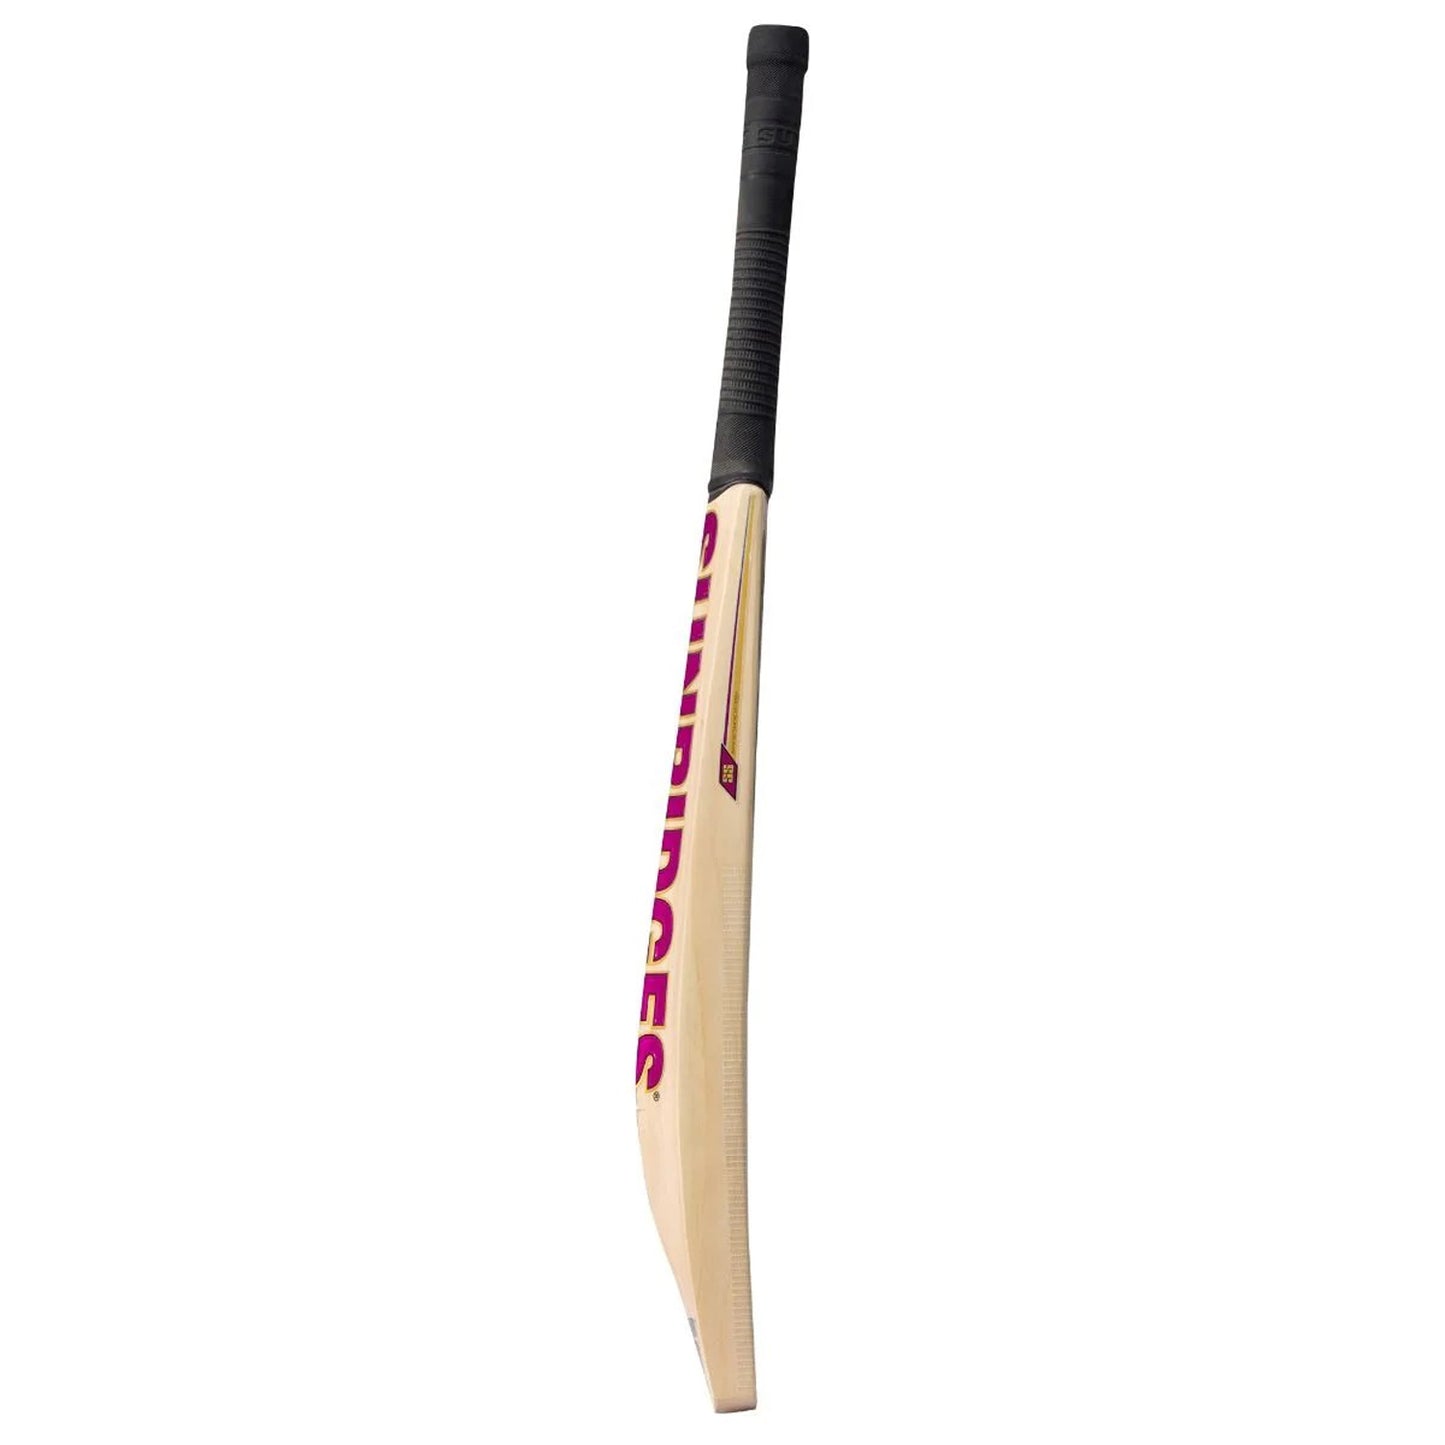 SS Vintage Platinum Kashmir Willow Cricket Bat - Best Price online Prokicksports.com